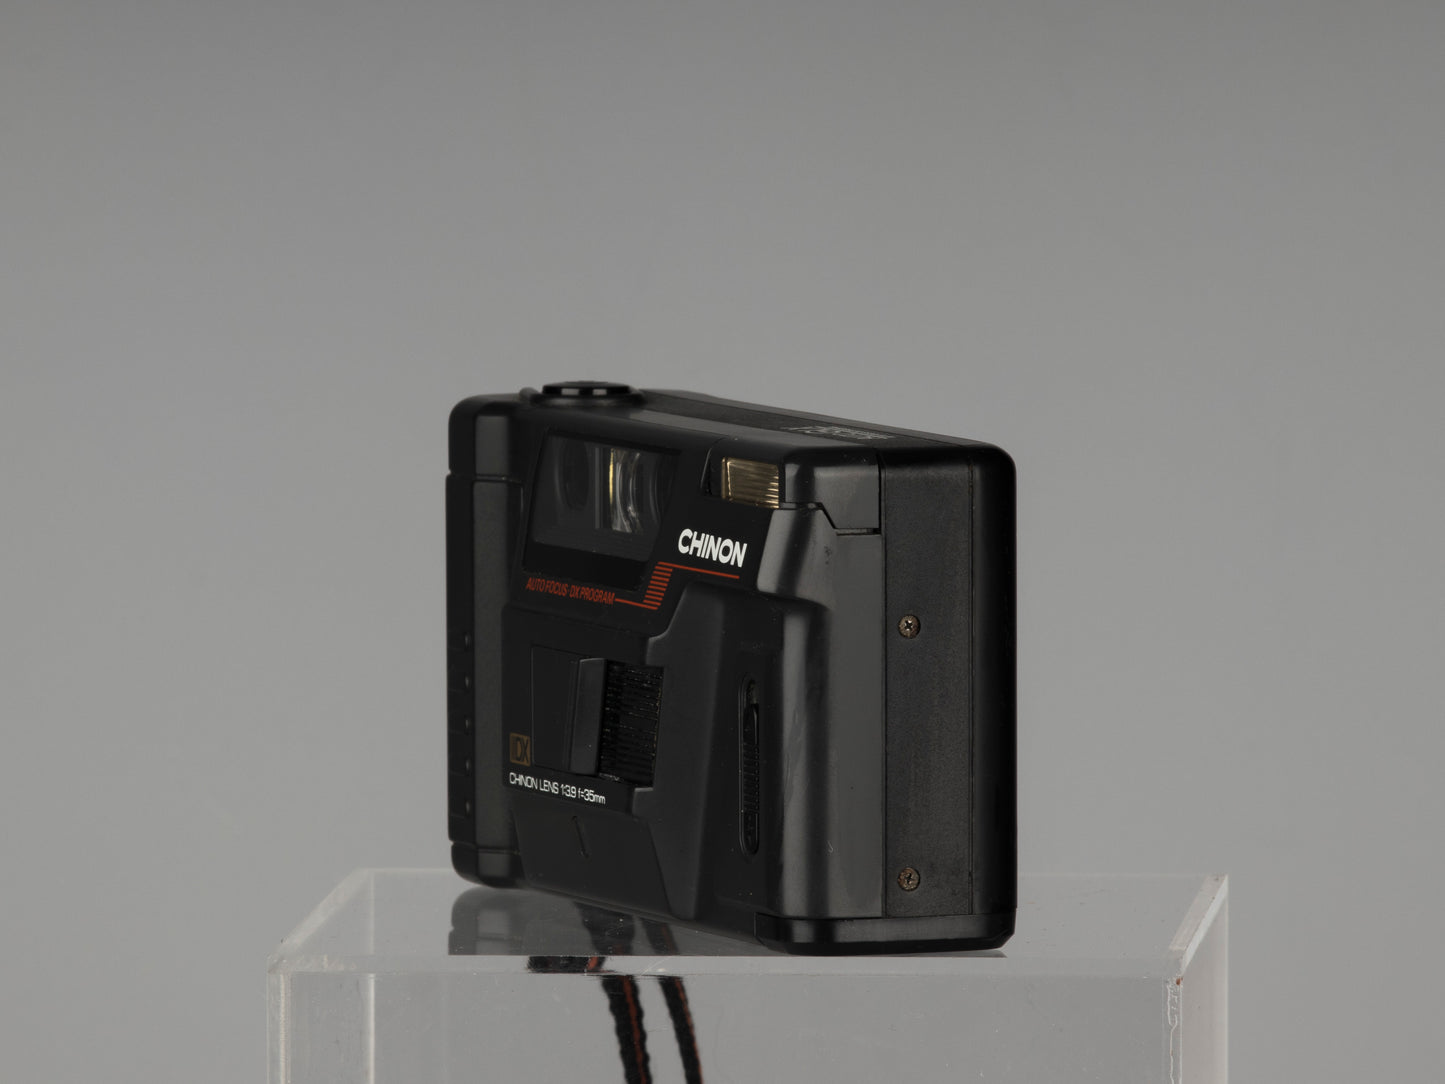 Chinon Auto GLX autofocus 35mm film camera with case